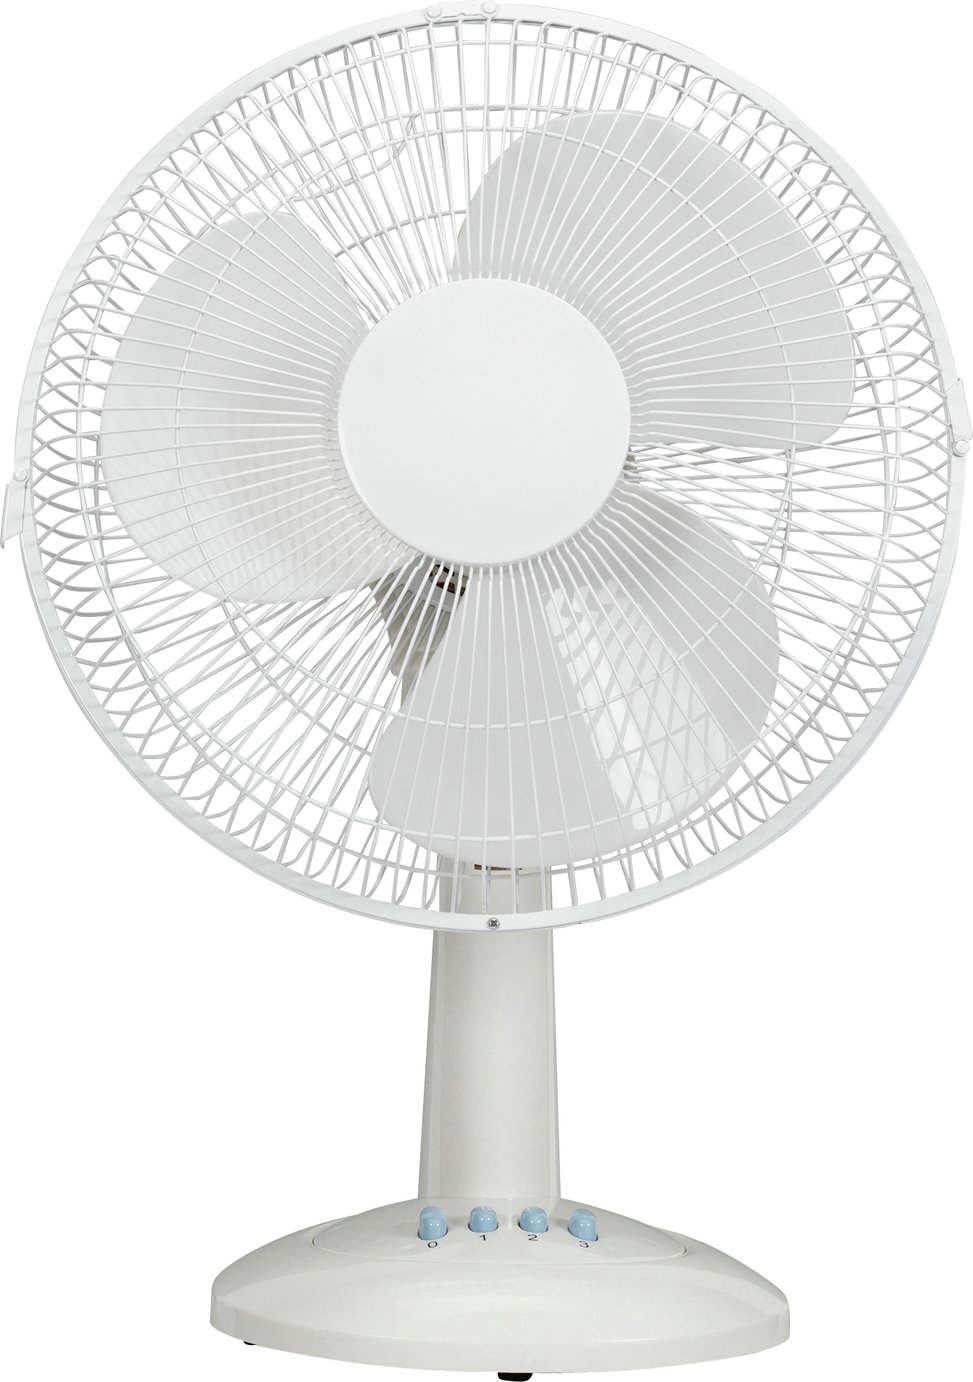 where can i buy a fan